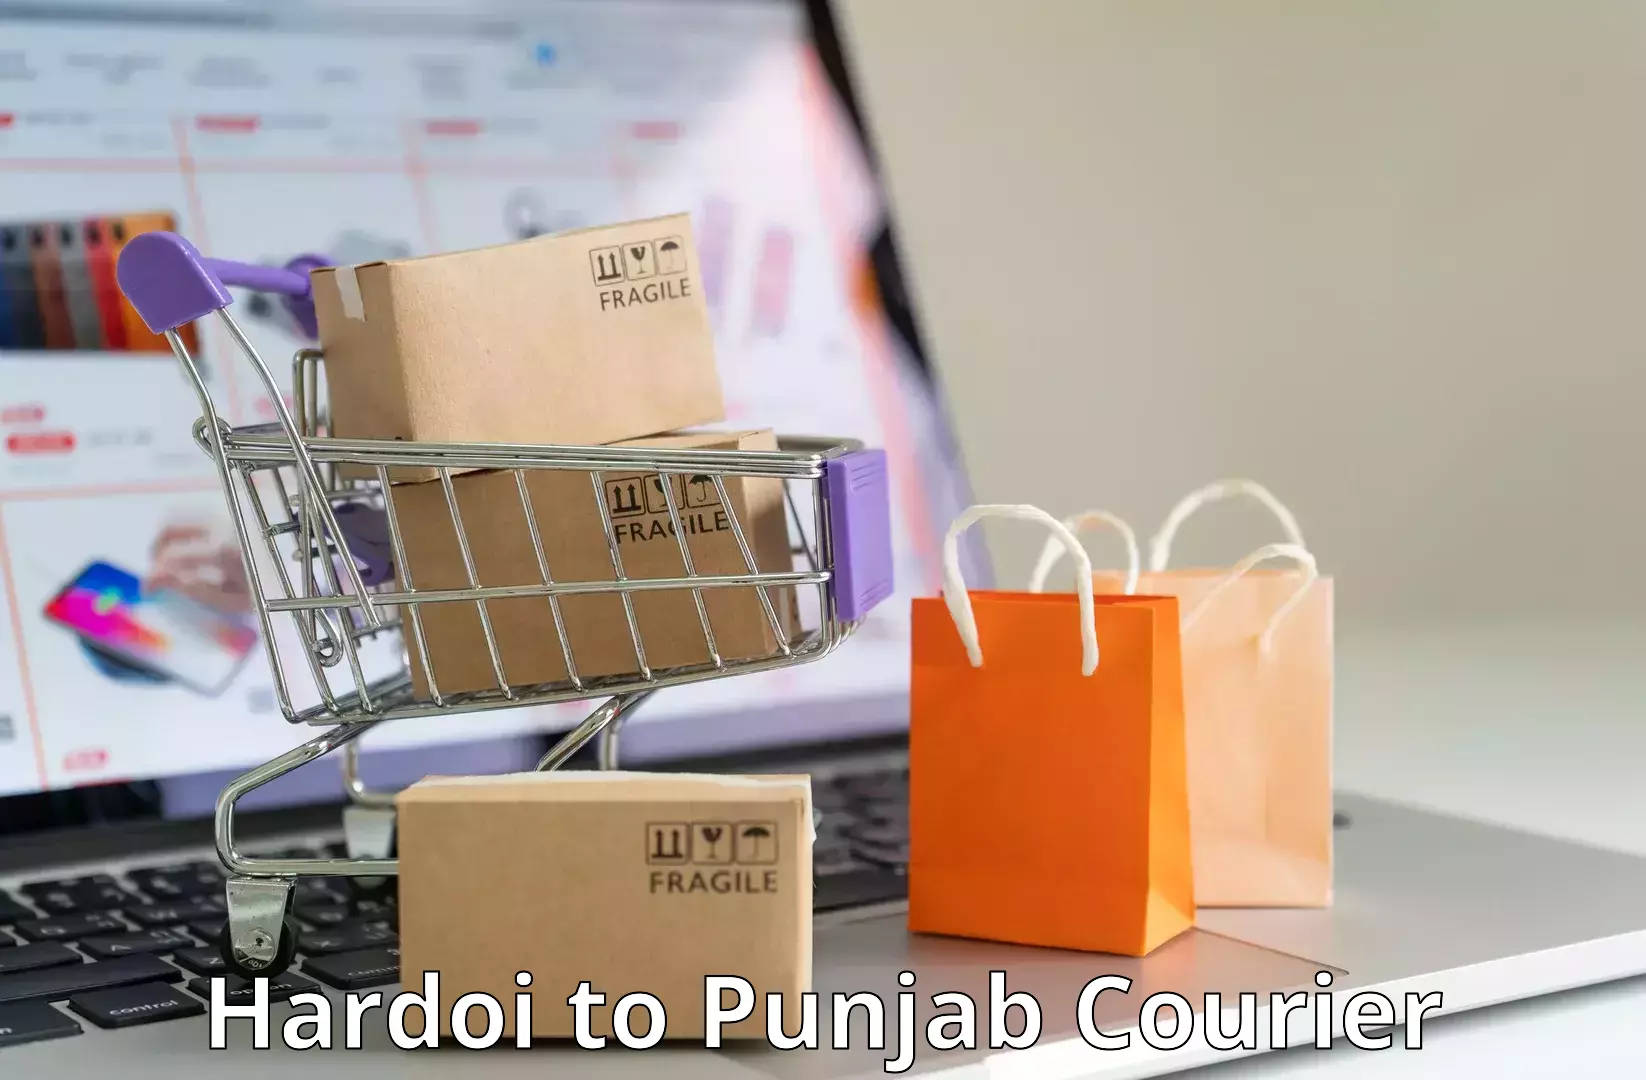 End-to-end delivery Hardoi to Punjab